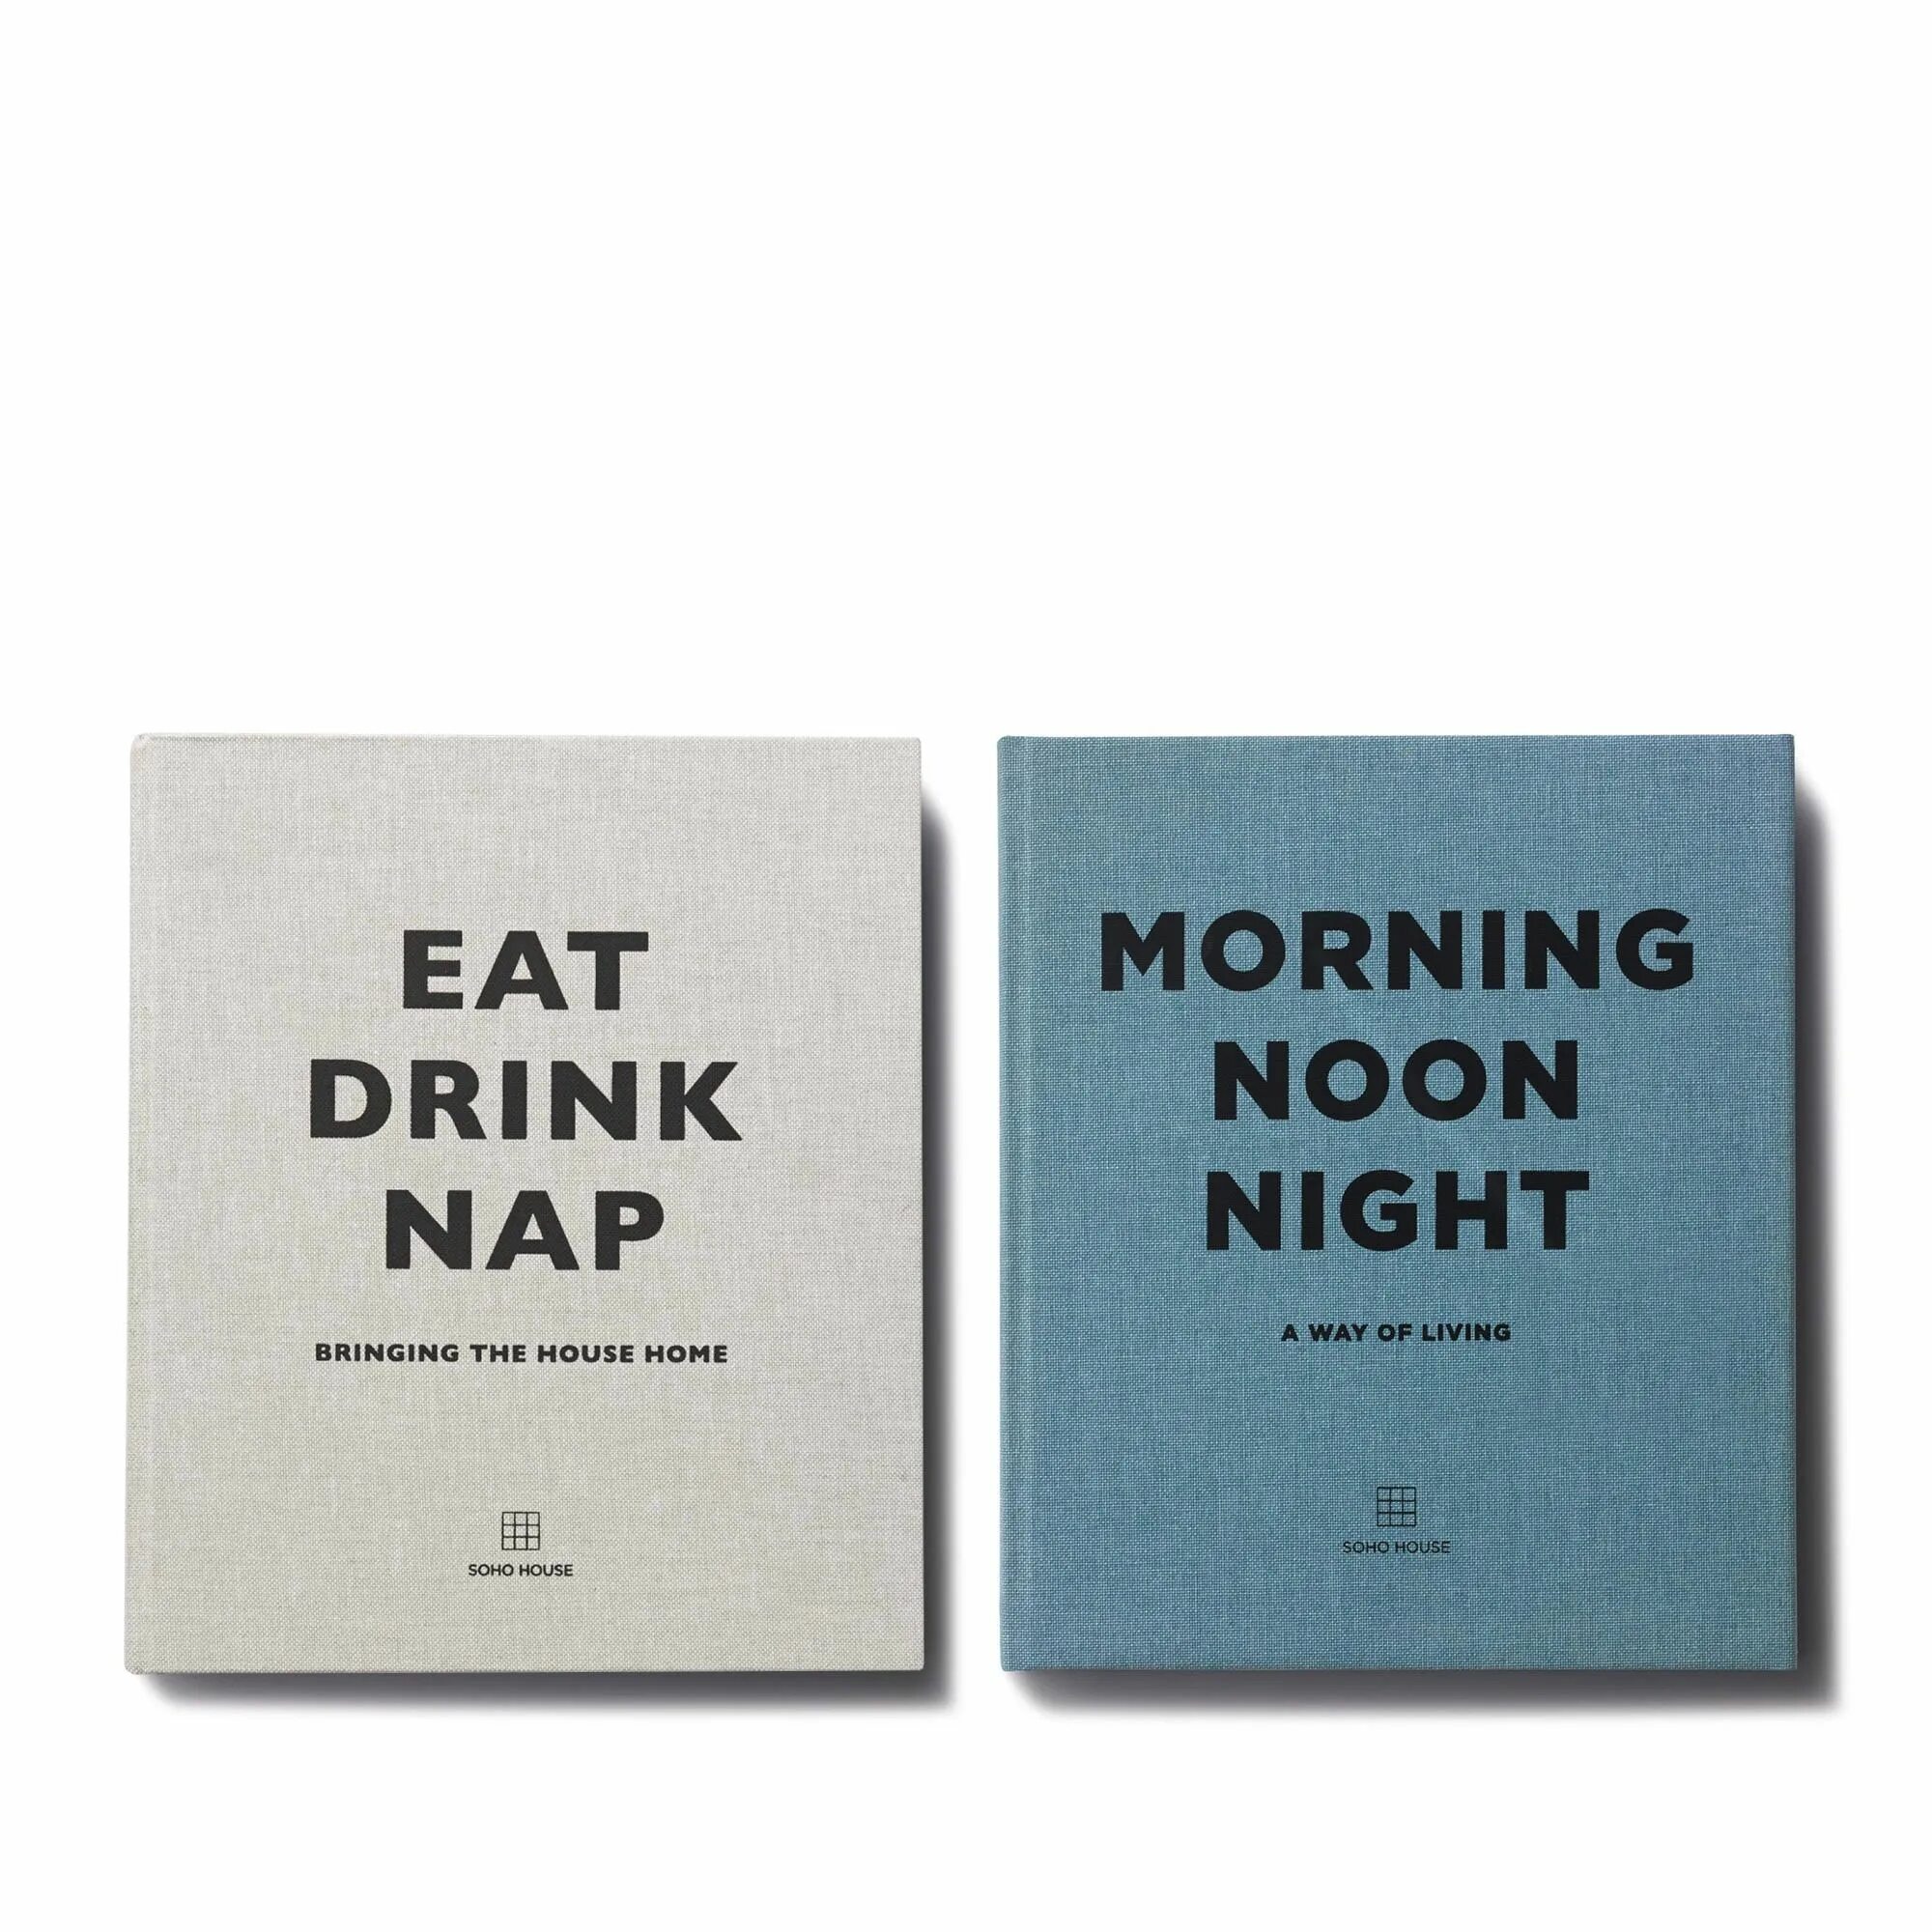 Eat, Drink, nap. Morning Noon Night книга. Eat Drink nap book. Eat Drink nap: bringing the House Home.